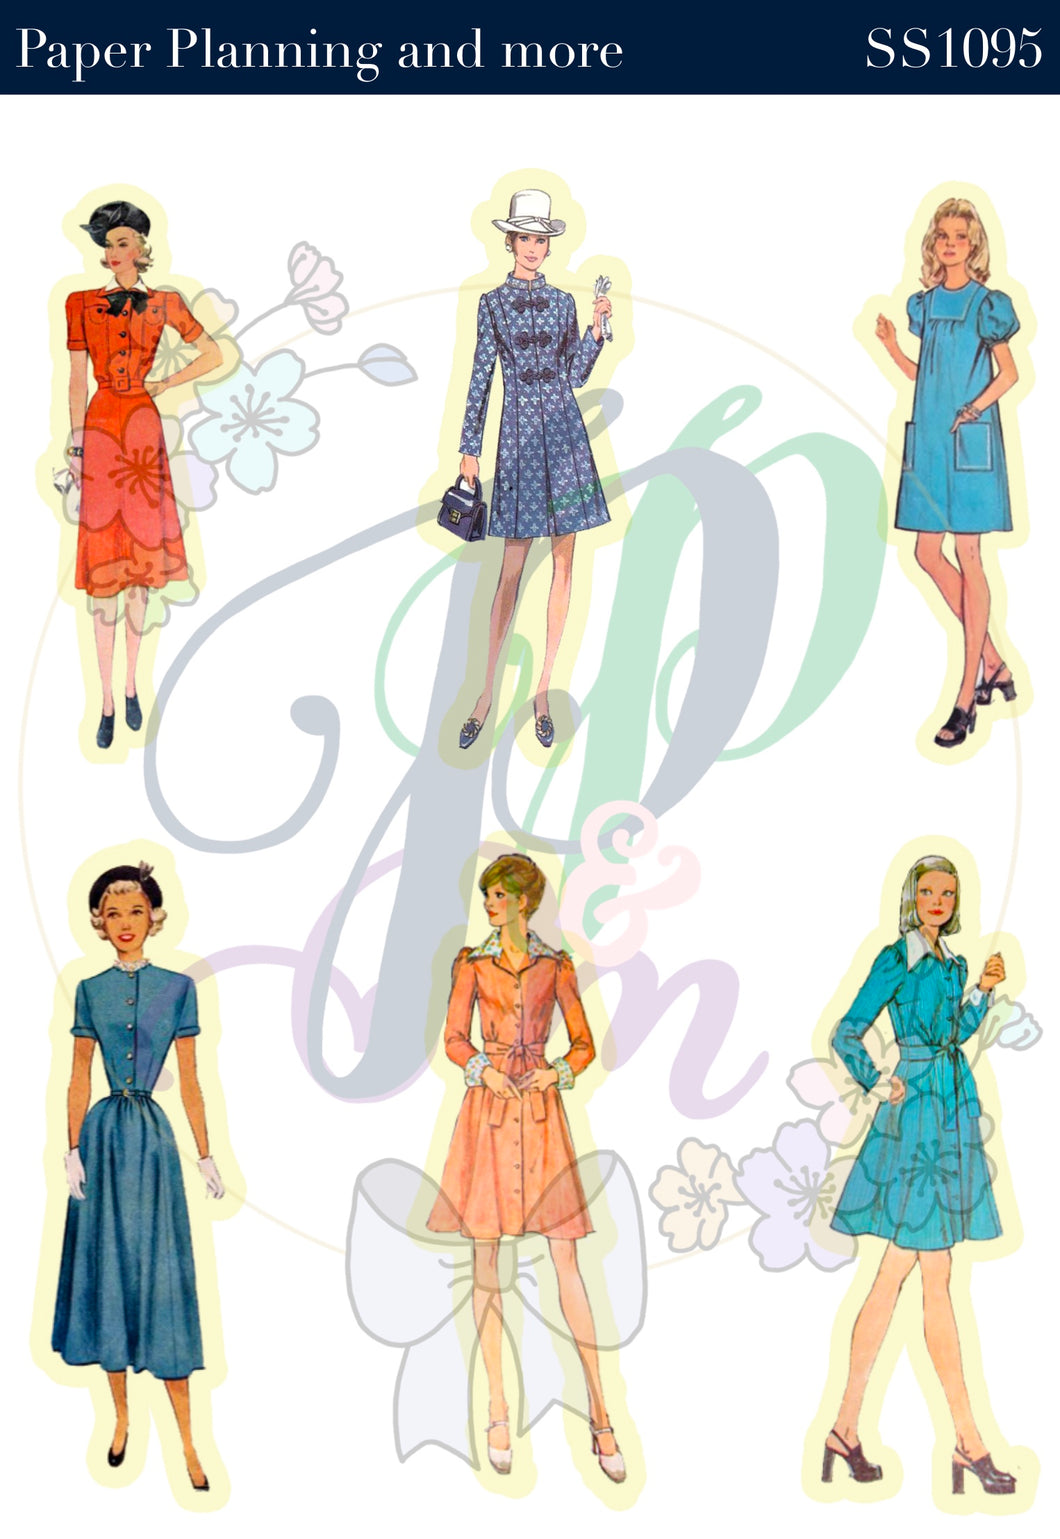 1920s Women Fashion 2 Sticker Sheet